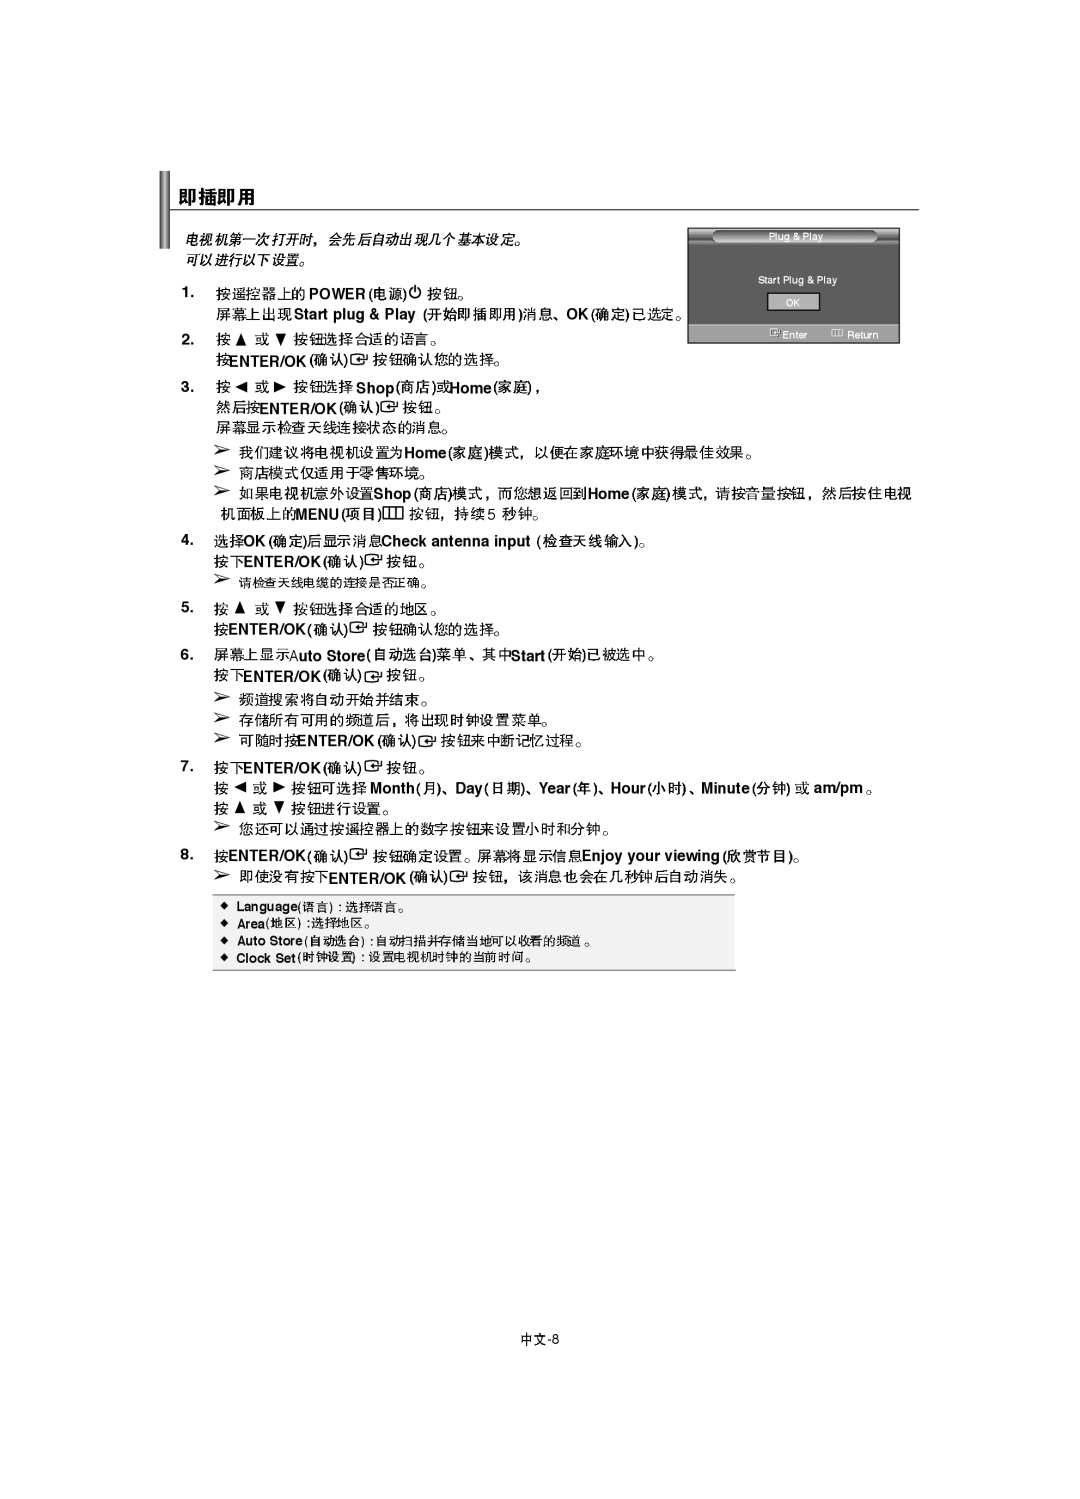 Samsung LA46F8, LA52F8 manual Home, am/pm, Language Area Auto Store Clock Set, Plug & Play Start Plug & Play OK Enter Return 